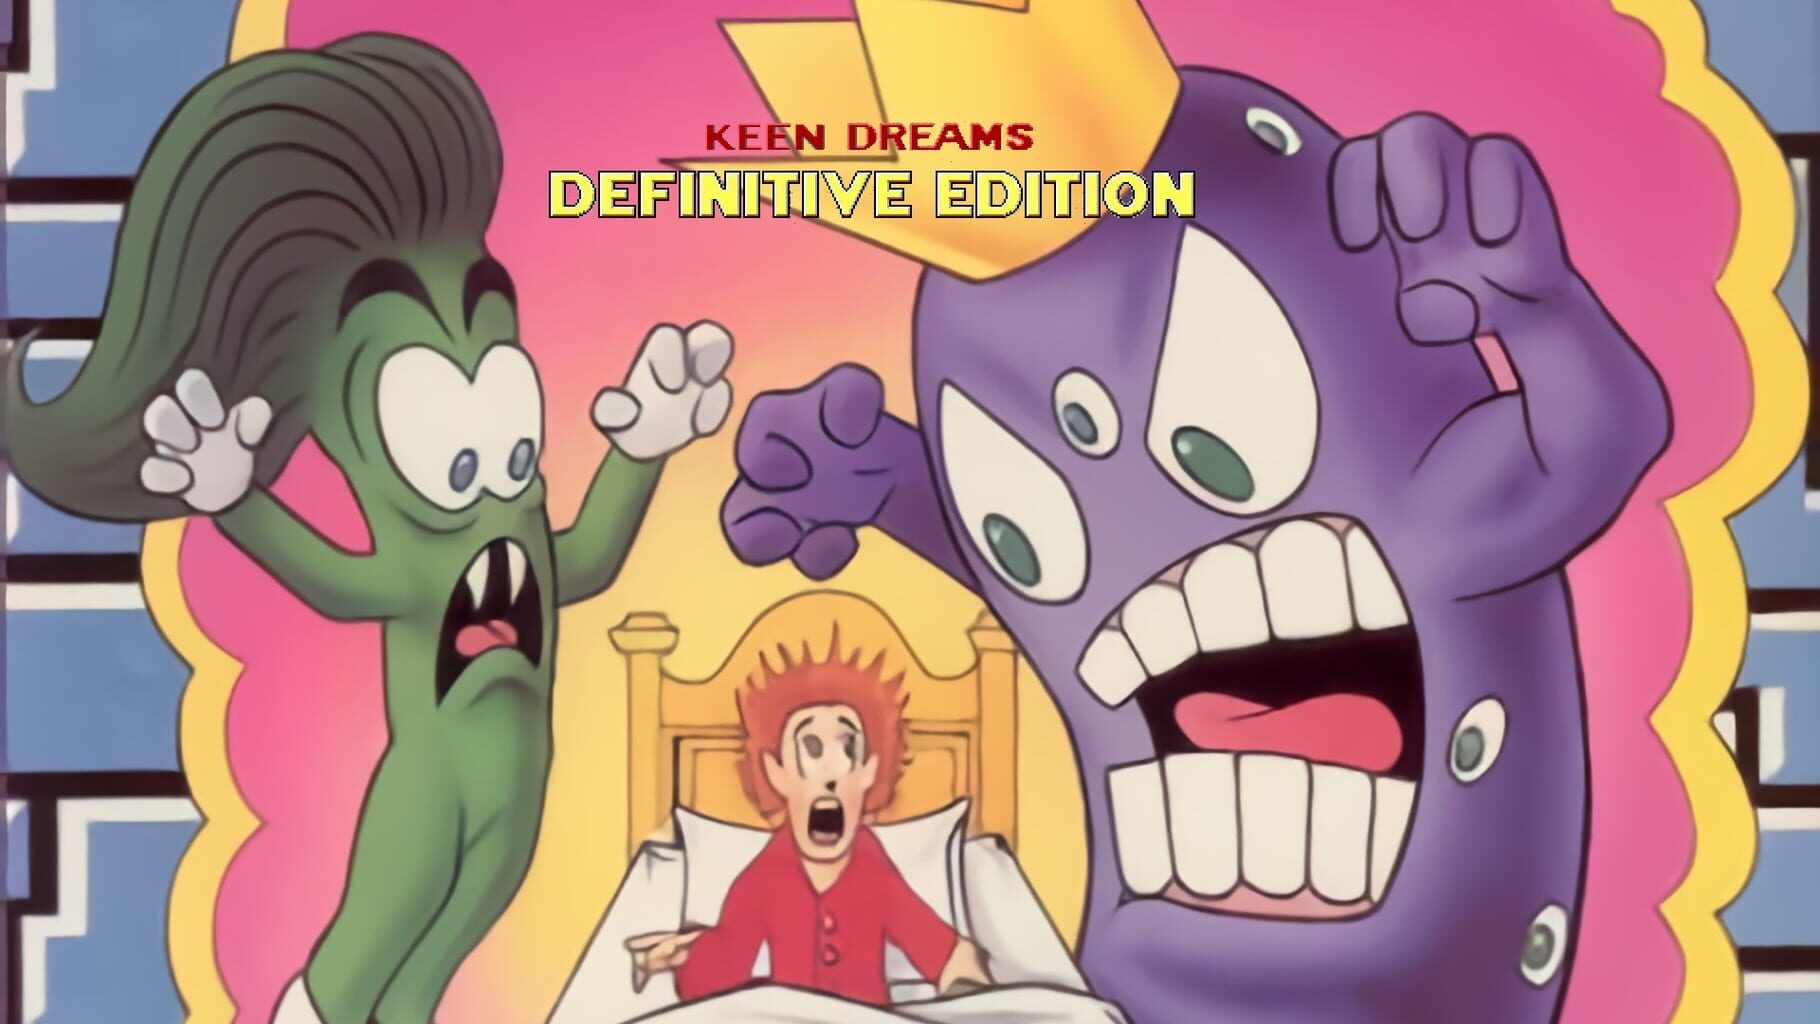 Commander Keen in Keen Dreams: Definitive Edition artwork